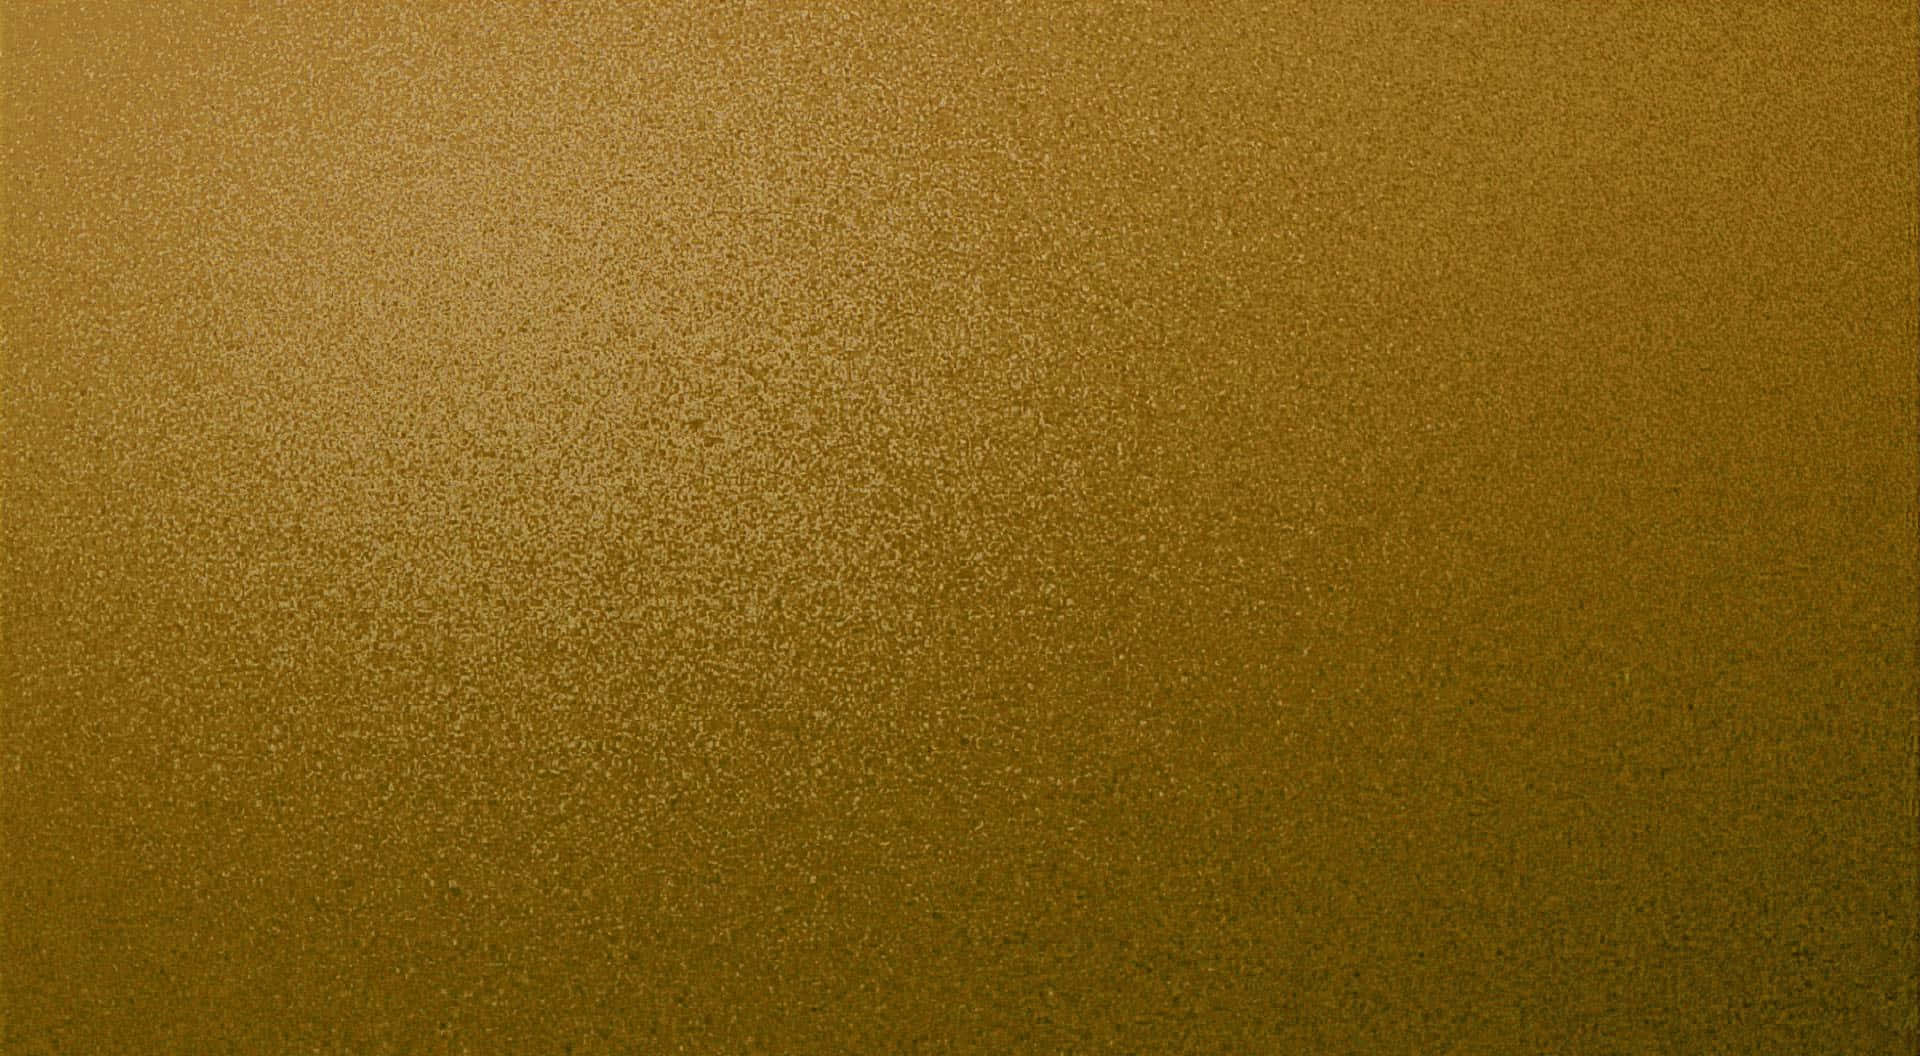 Fundode Textura Dourada